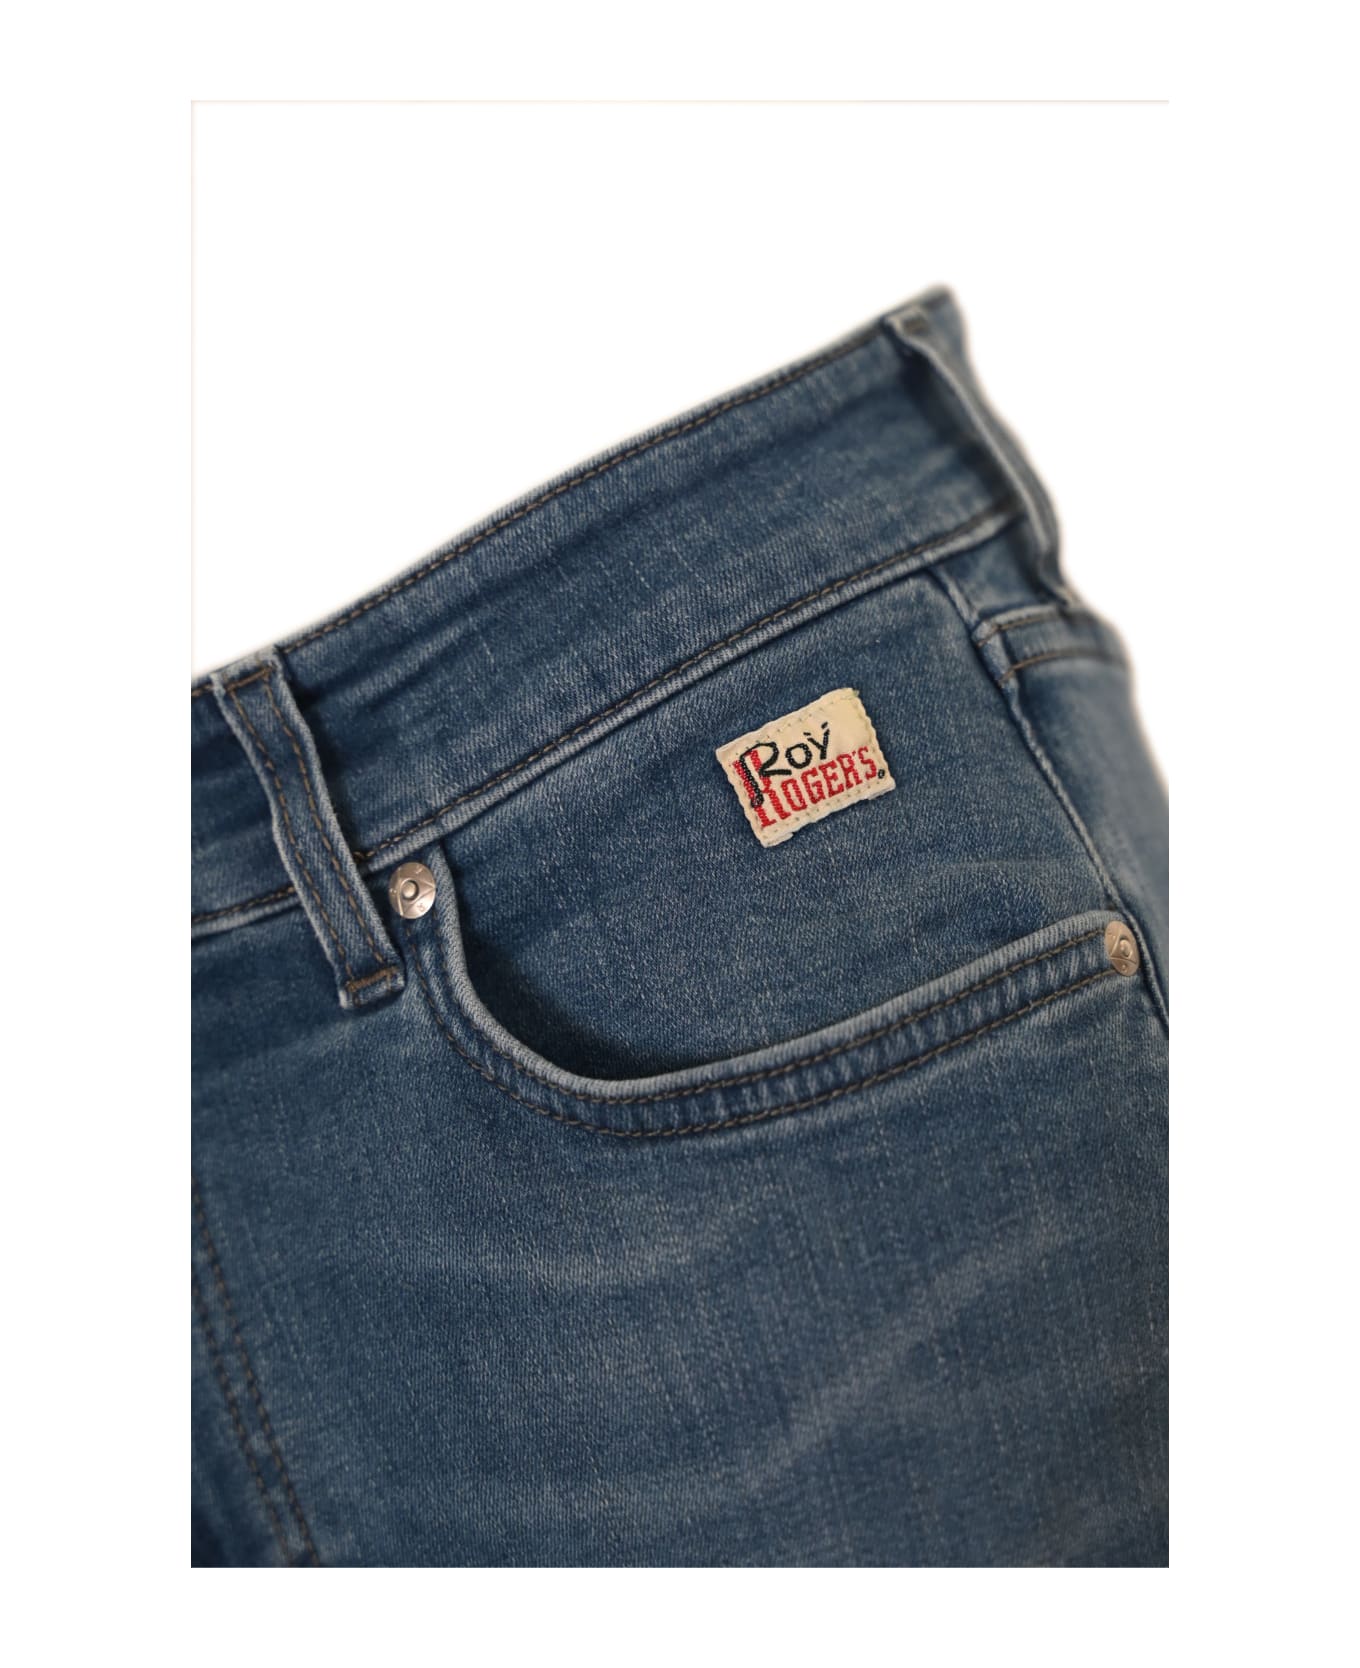 Roy Rogers 317 Denim Jeans - Denim